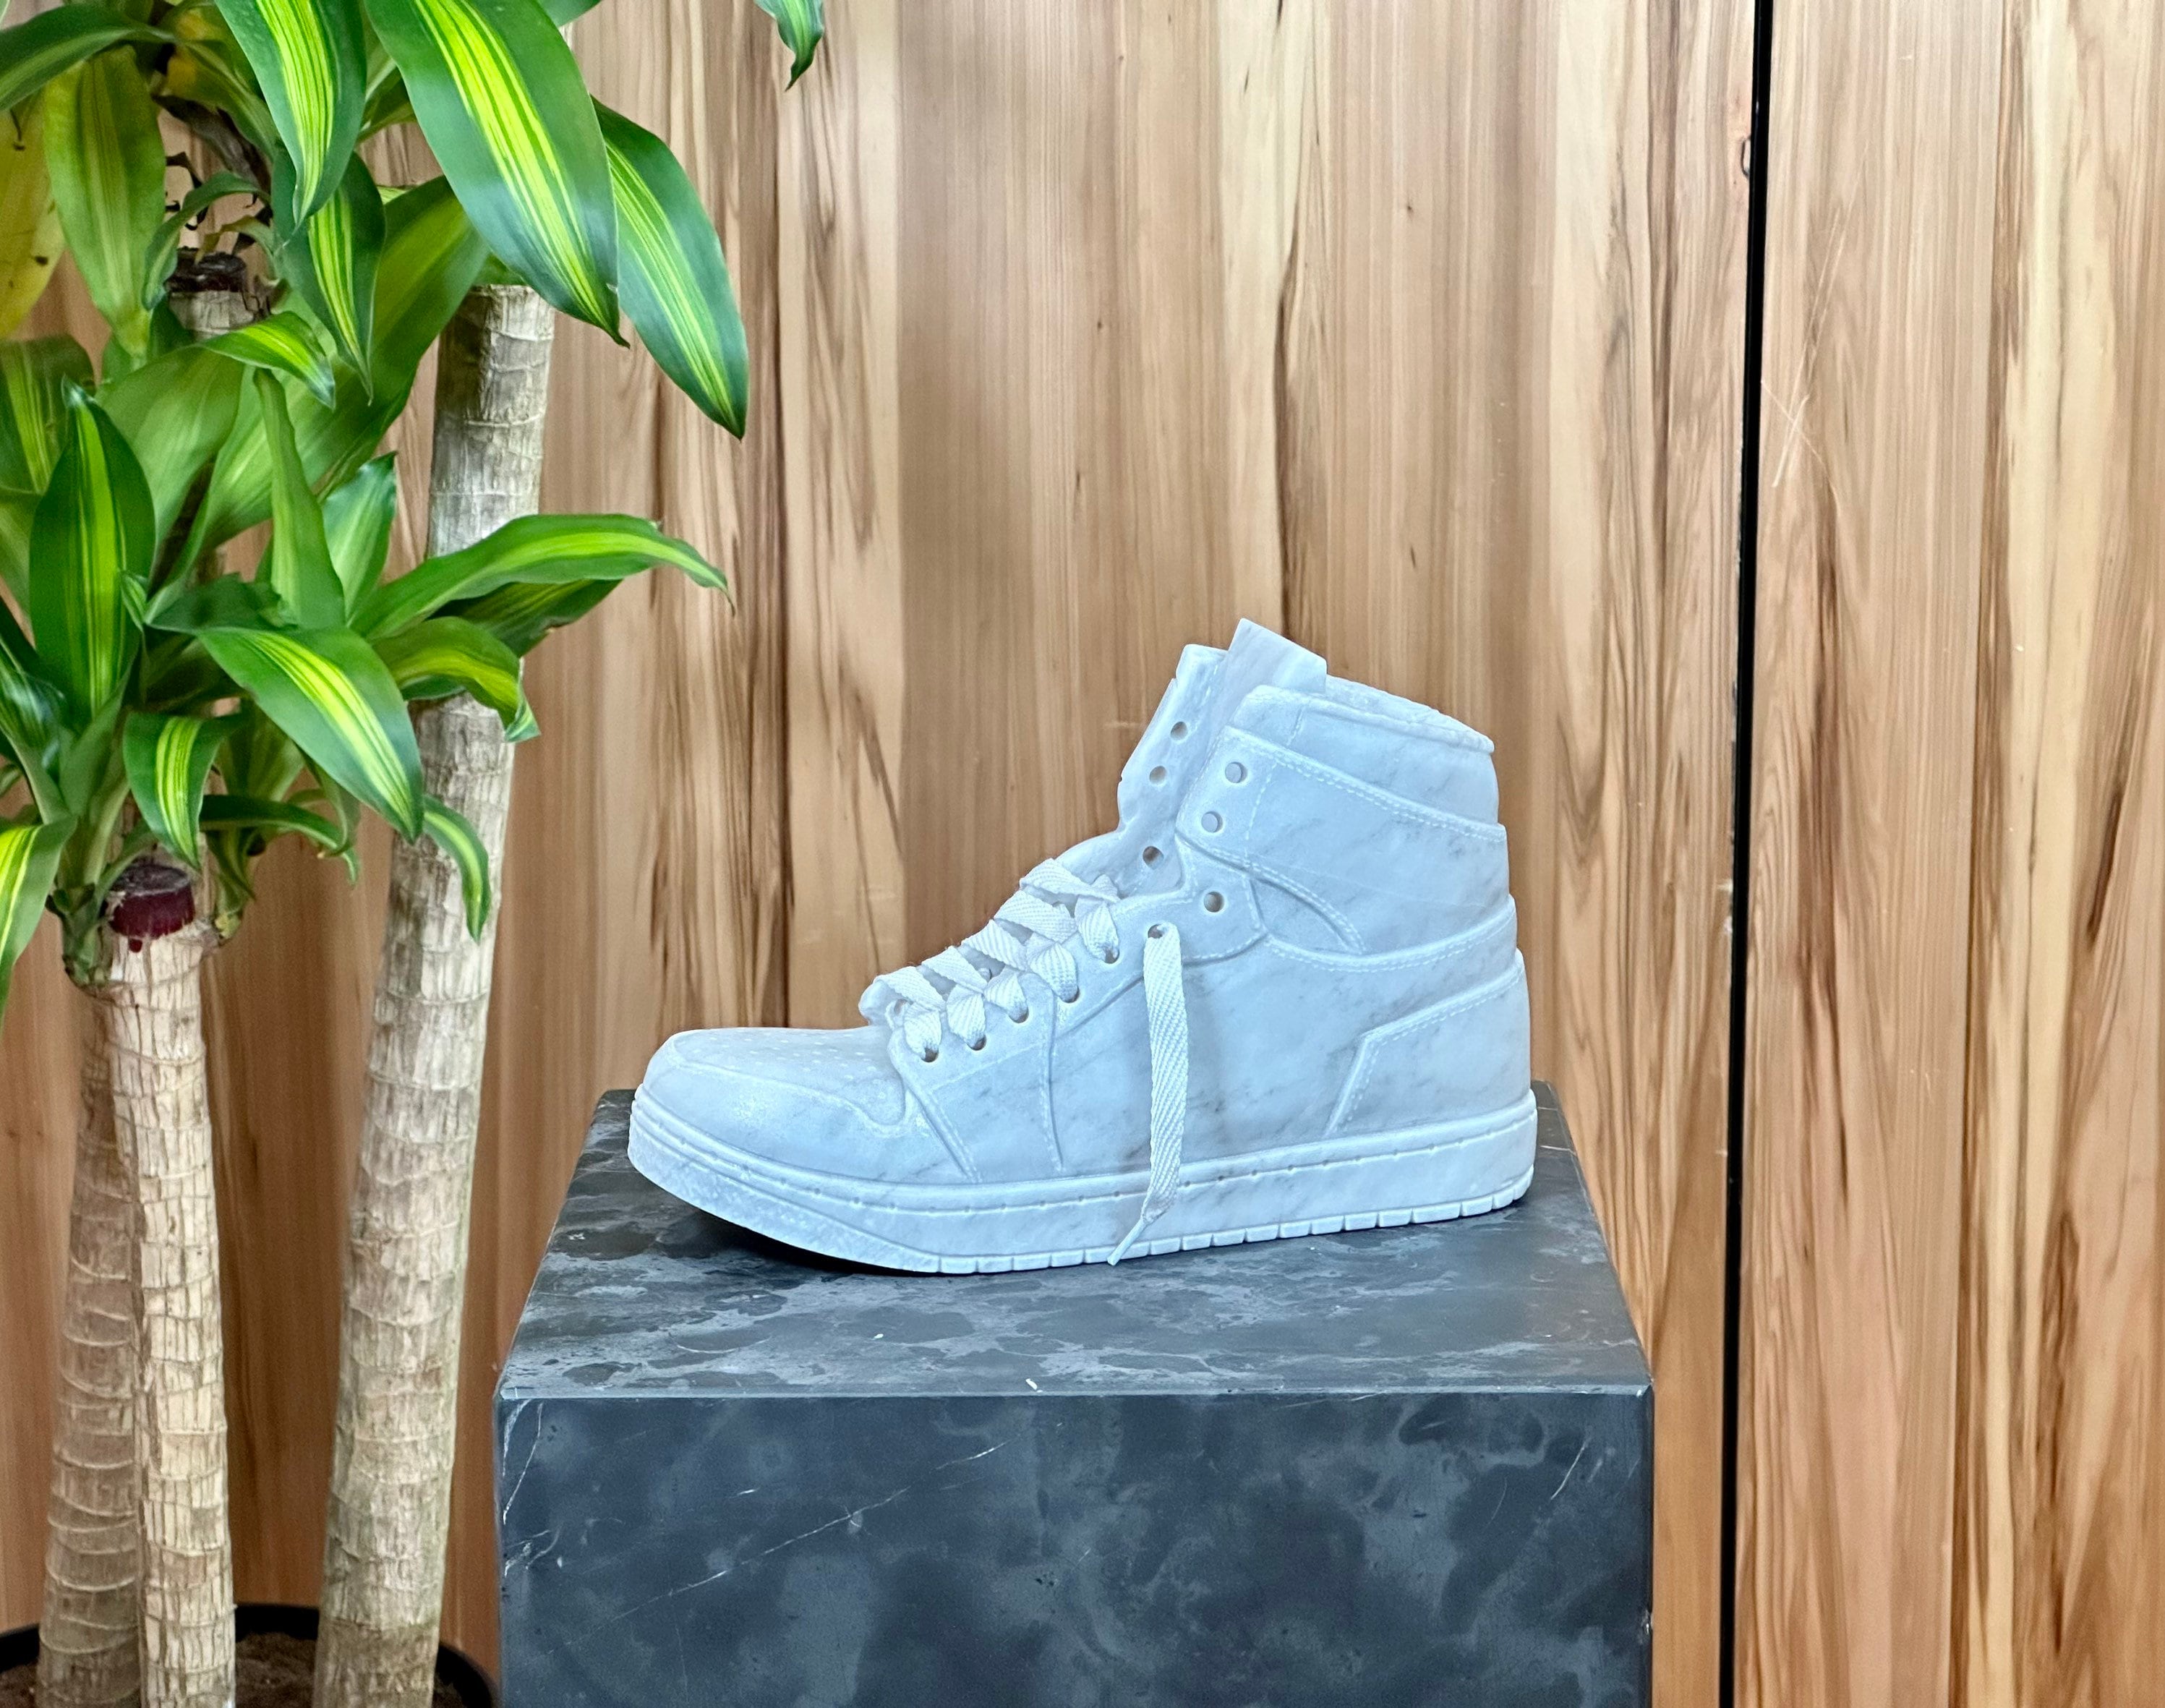 White Marble Hightop Shoe - Handmade Statue of Jordan Shoe - Nike, Hand-carved, One of a Kind, Art